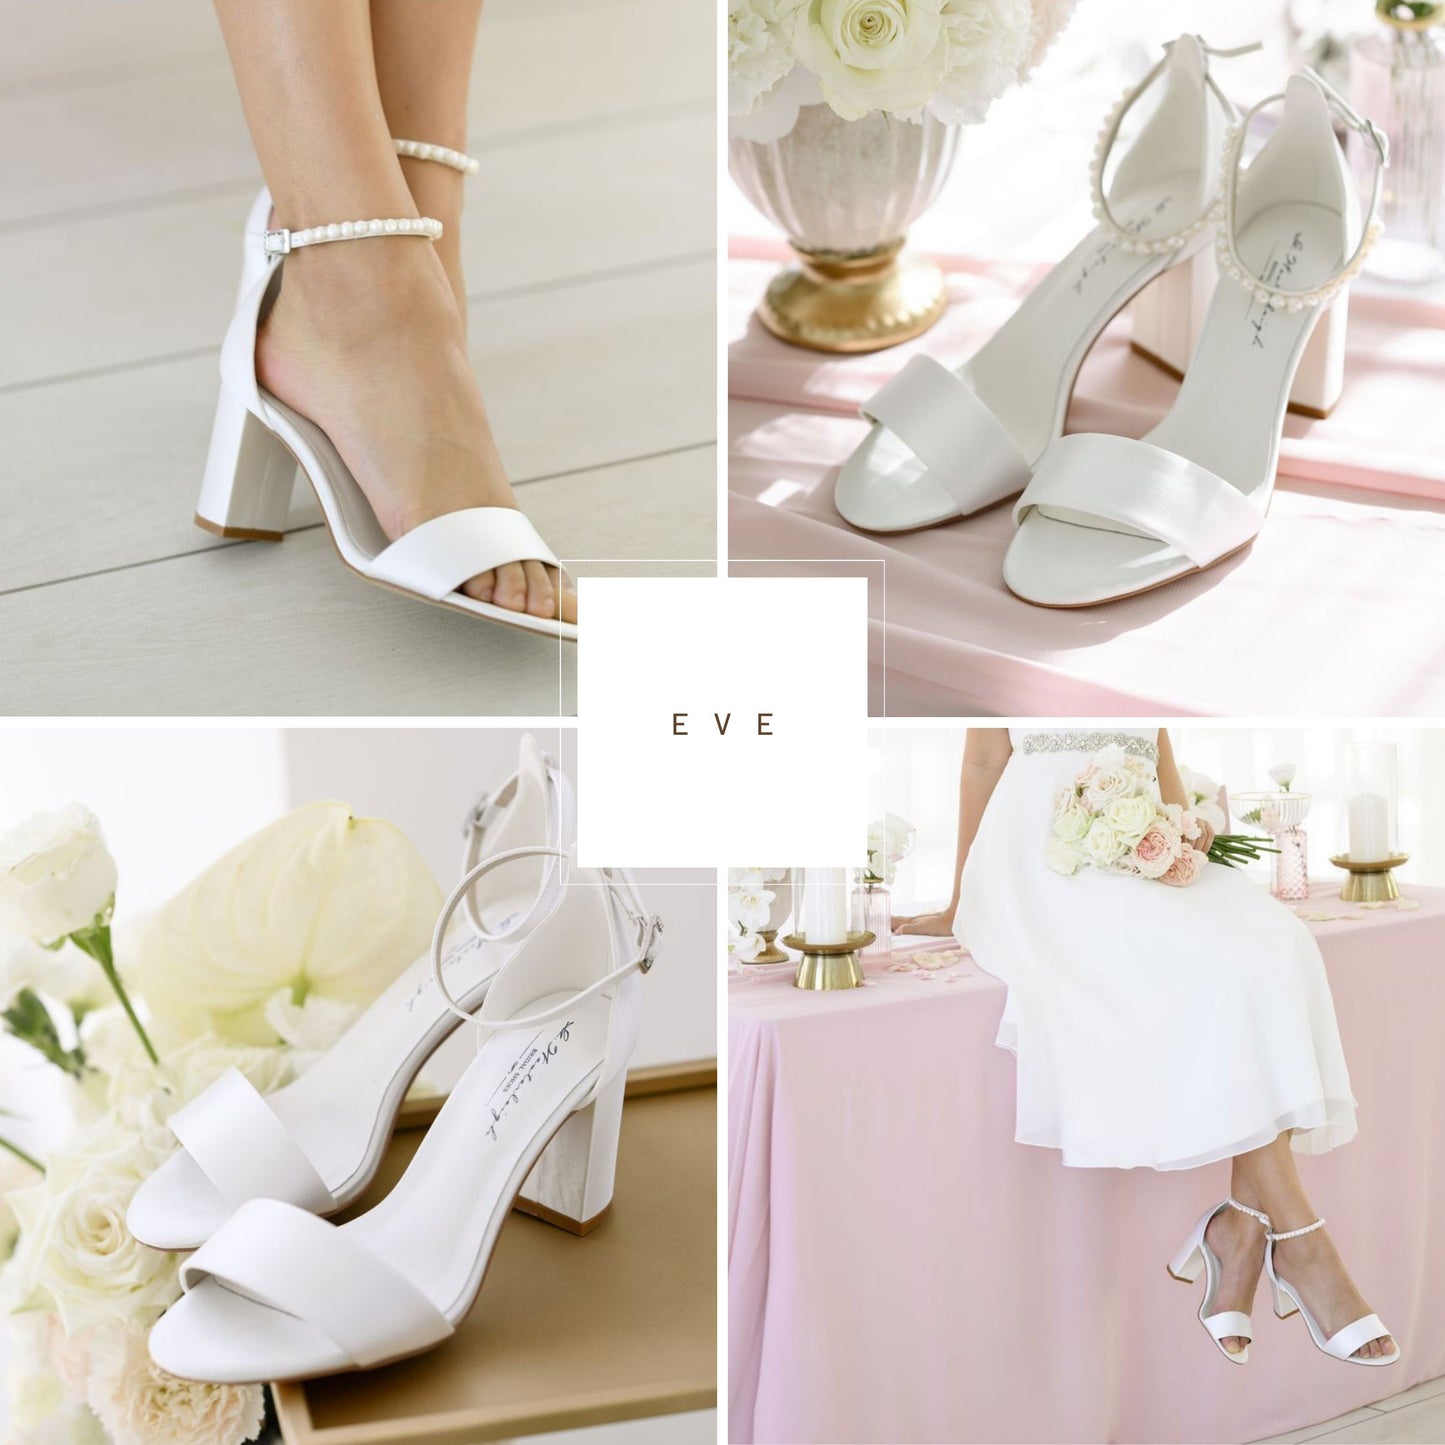 eve-wedding-shoes